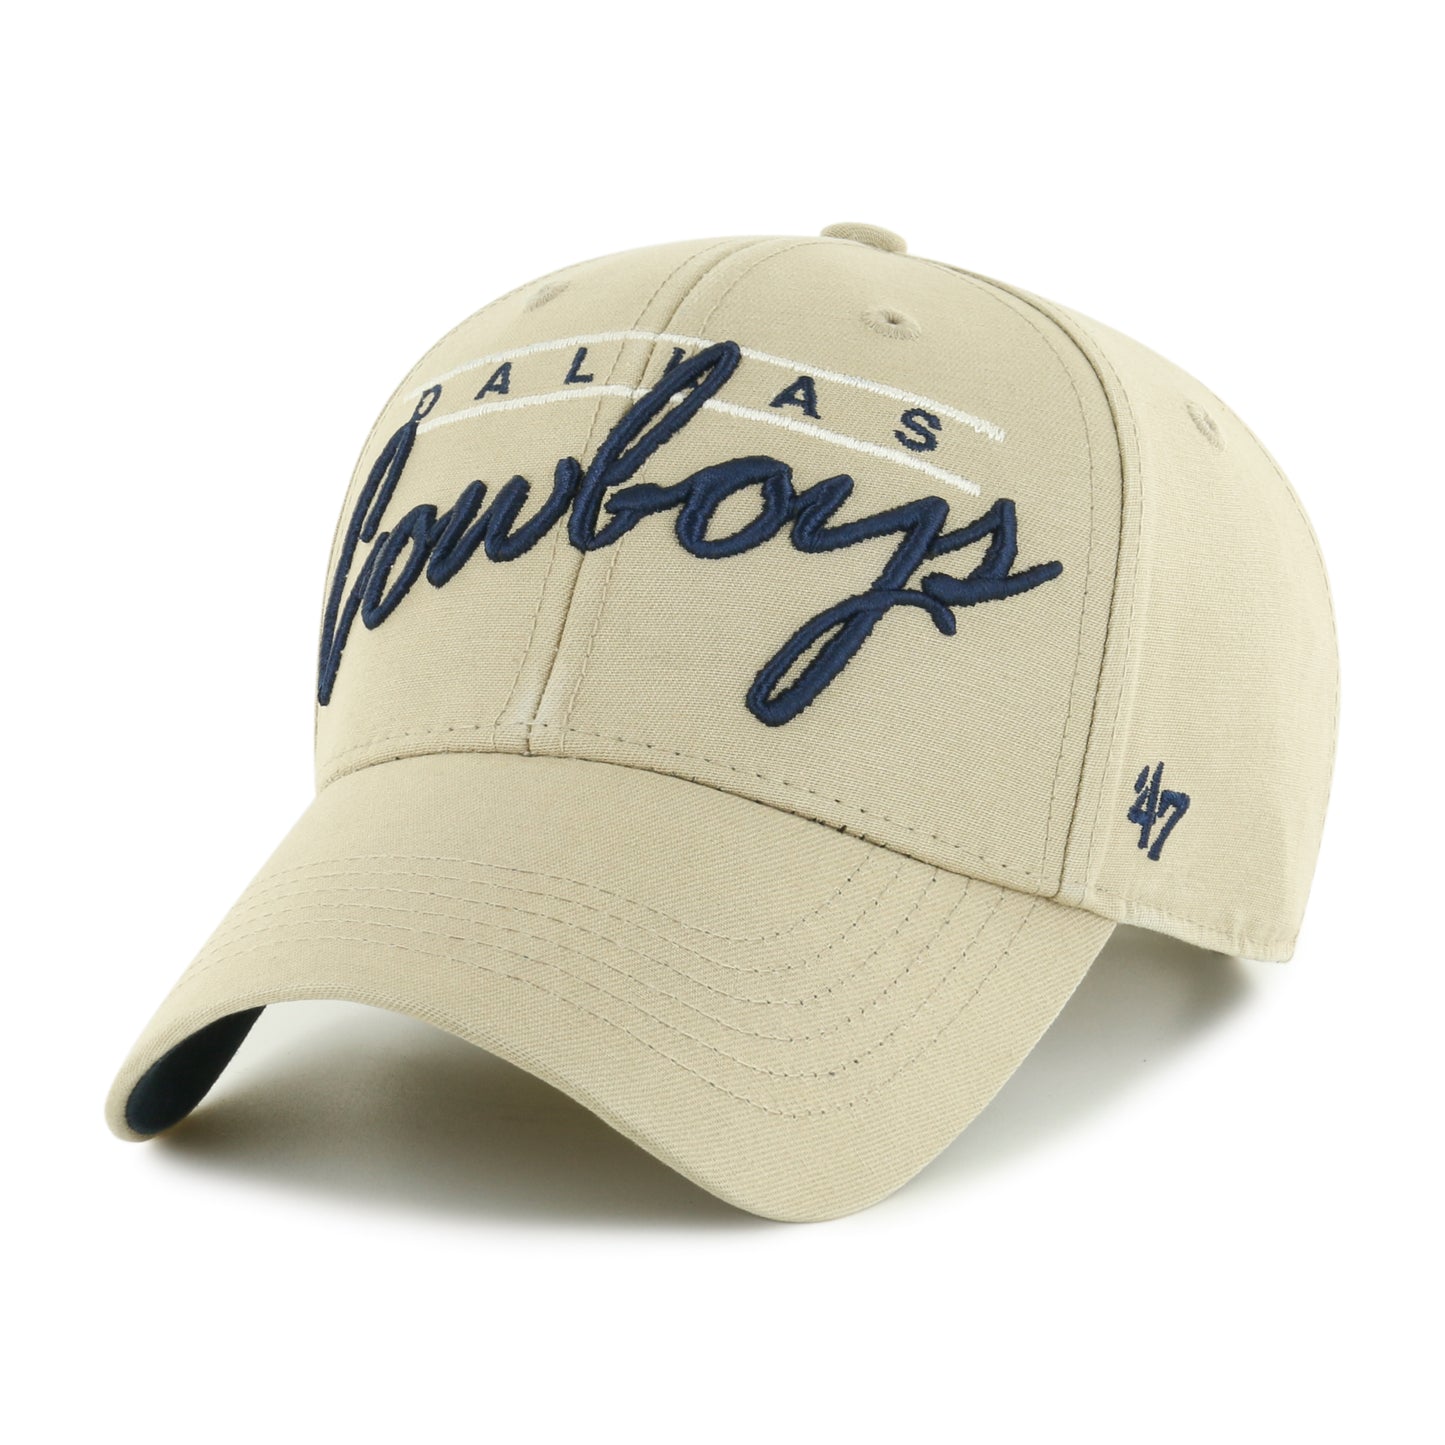 Dallas Cowboys '47 Atwood MVP Adjustable Hat - Khaki